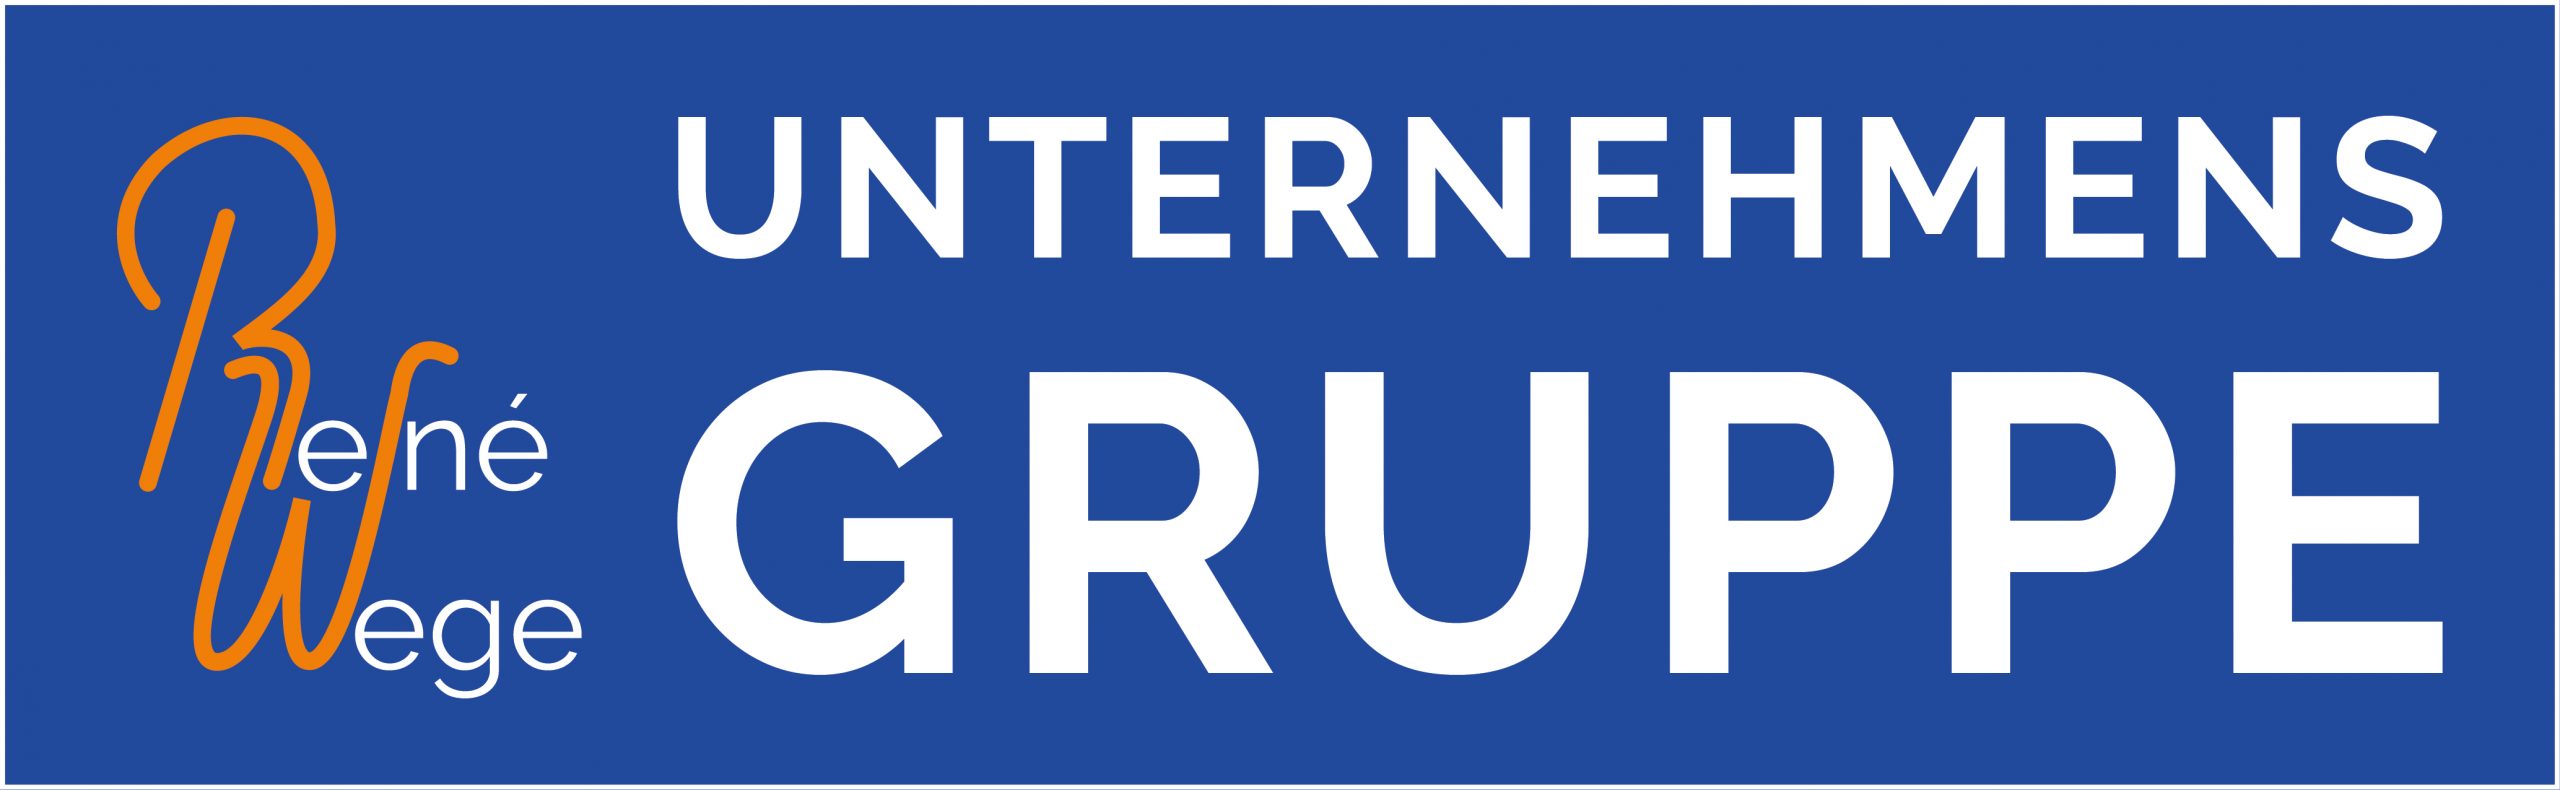 Rene_Wege_Unternehmensgruppe_Logo